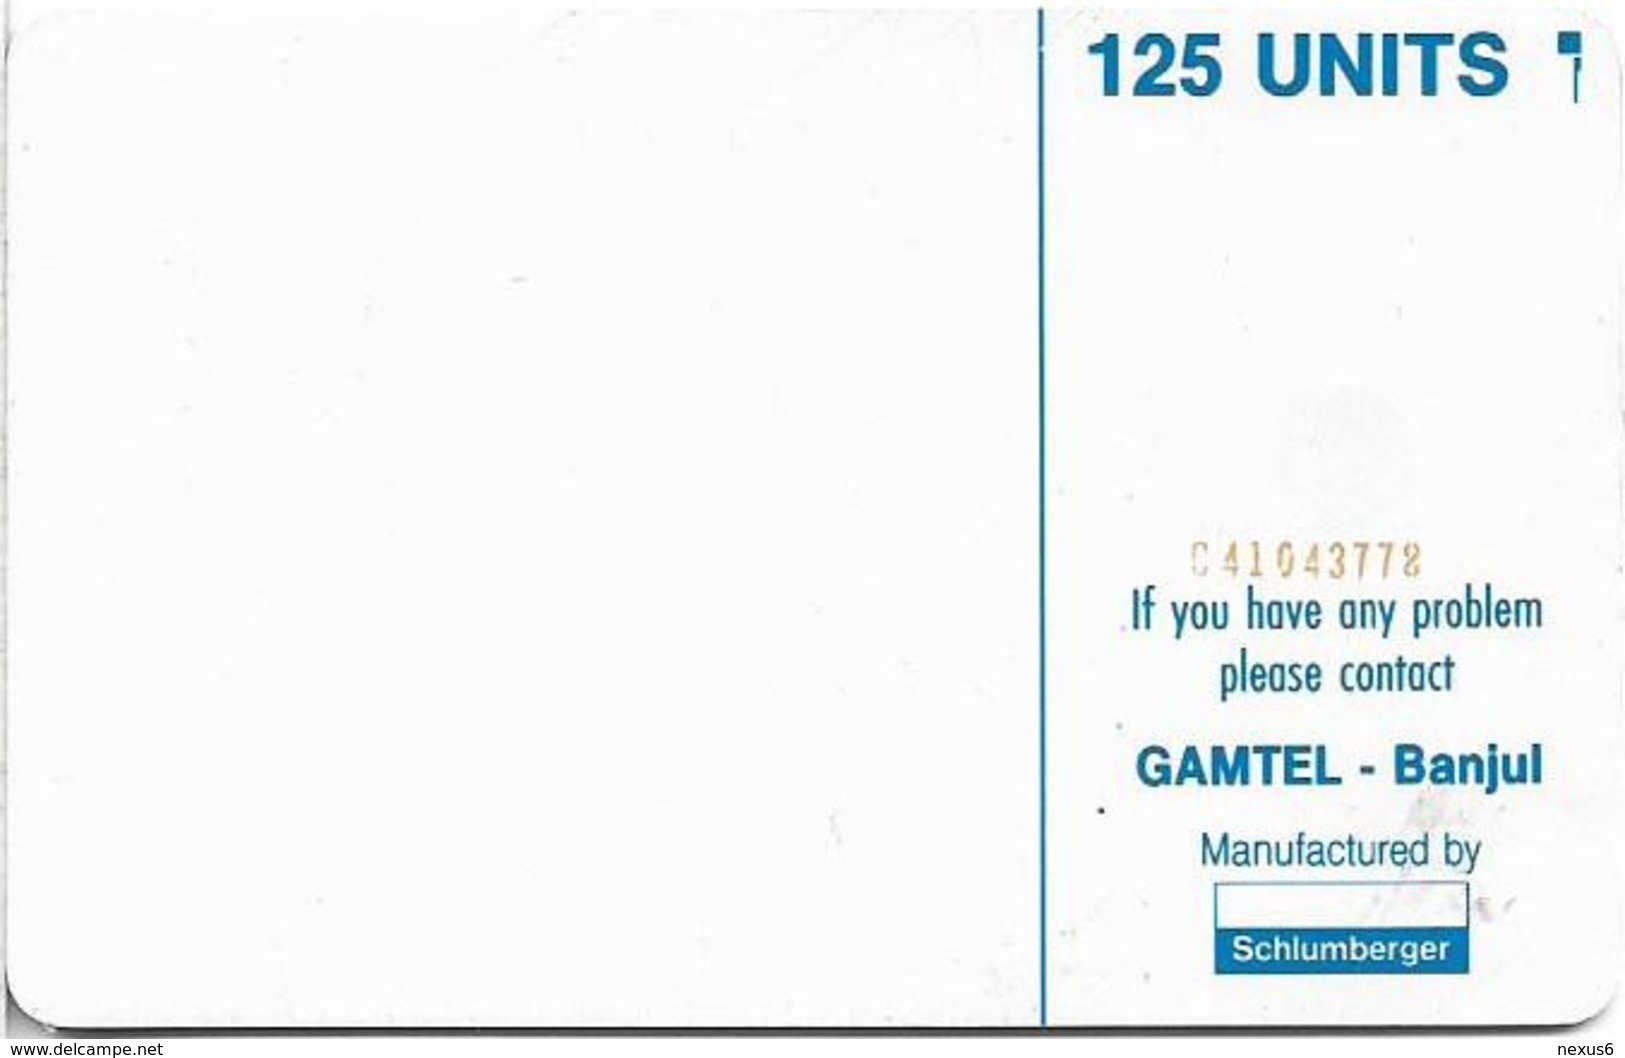 Gambia - Gamtel - Logo Orange, 125Units, SC5 ISO, Cn. C41043778 Red, No Hole On Rev, Matt Surface, Used - Gambie